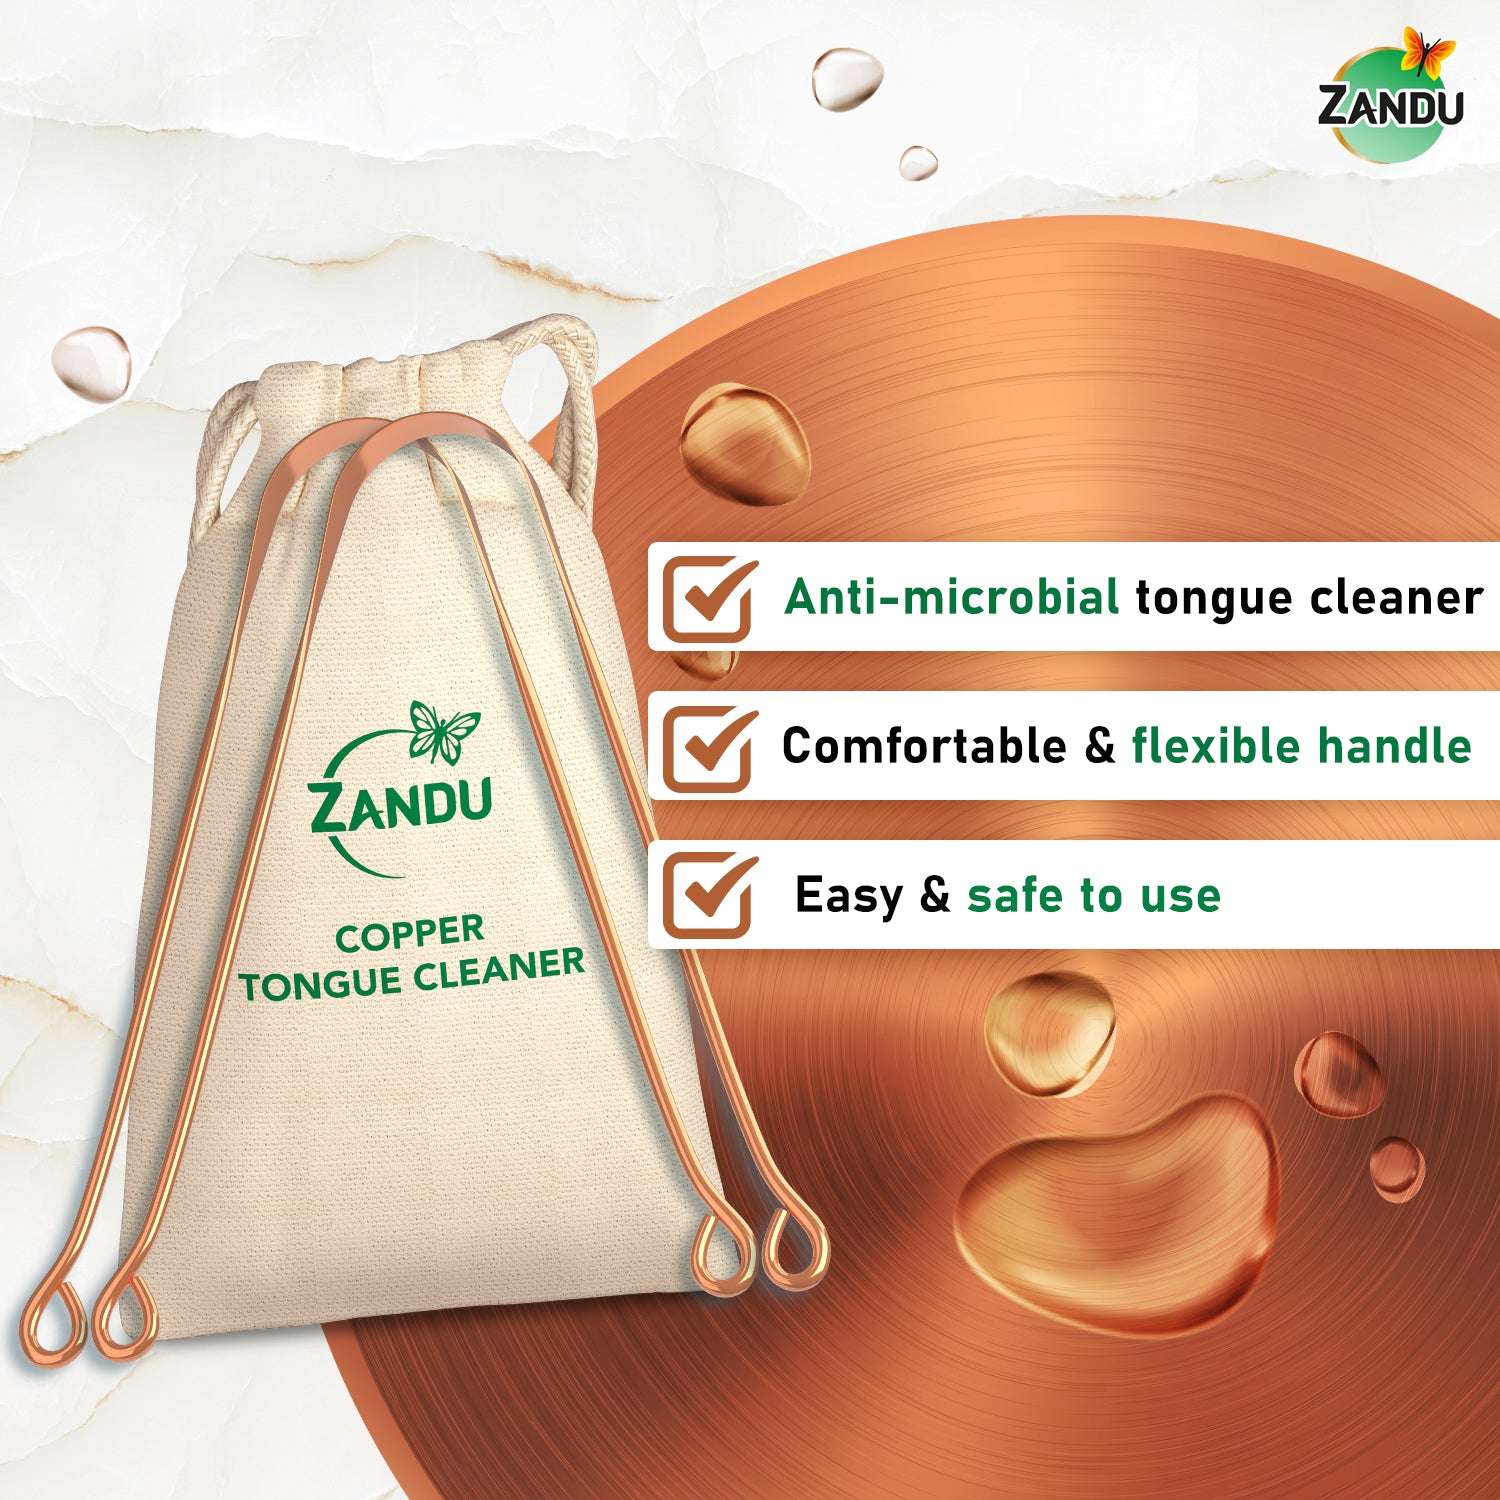 Zandu Copper Tongue Cleaner for Fresh Breath, Improved Taste Sense & Bacteria Removal